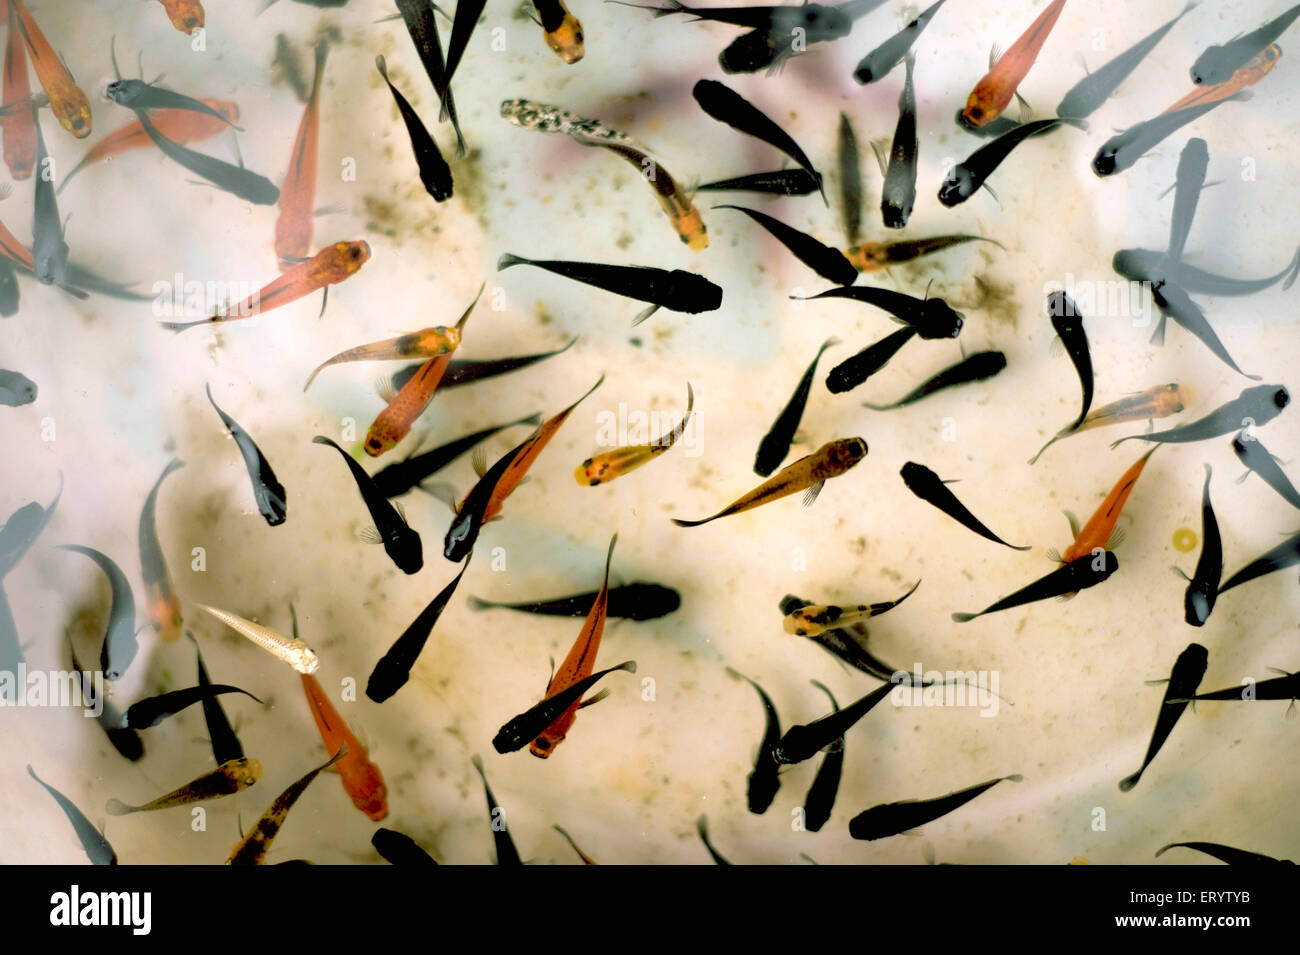 Oranda, race de poissons rouges, poissons d'aquarium, carassius auratus, marché aux poissons, Galiff Street, Calcutta, Kolkata, Bengale occidental, Inde, asie Banque D'Images